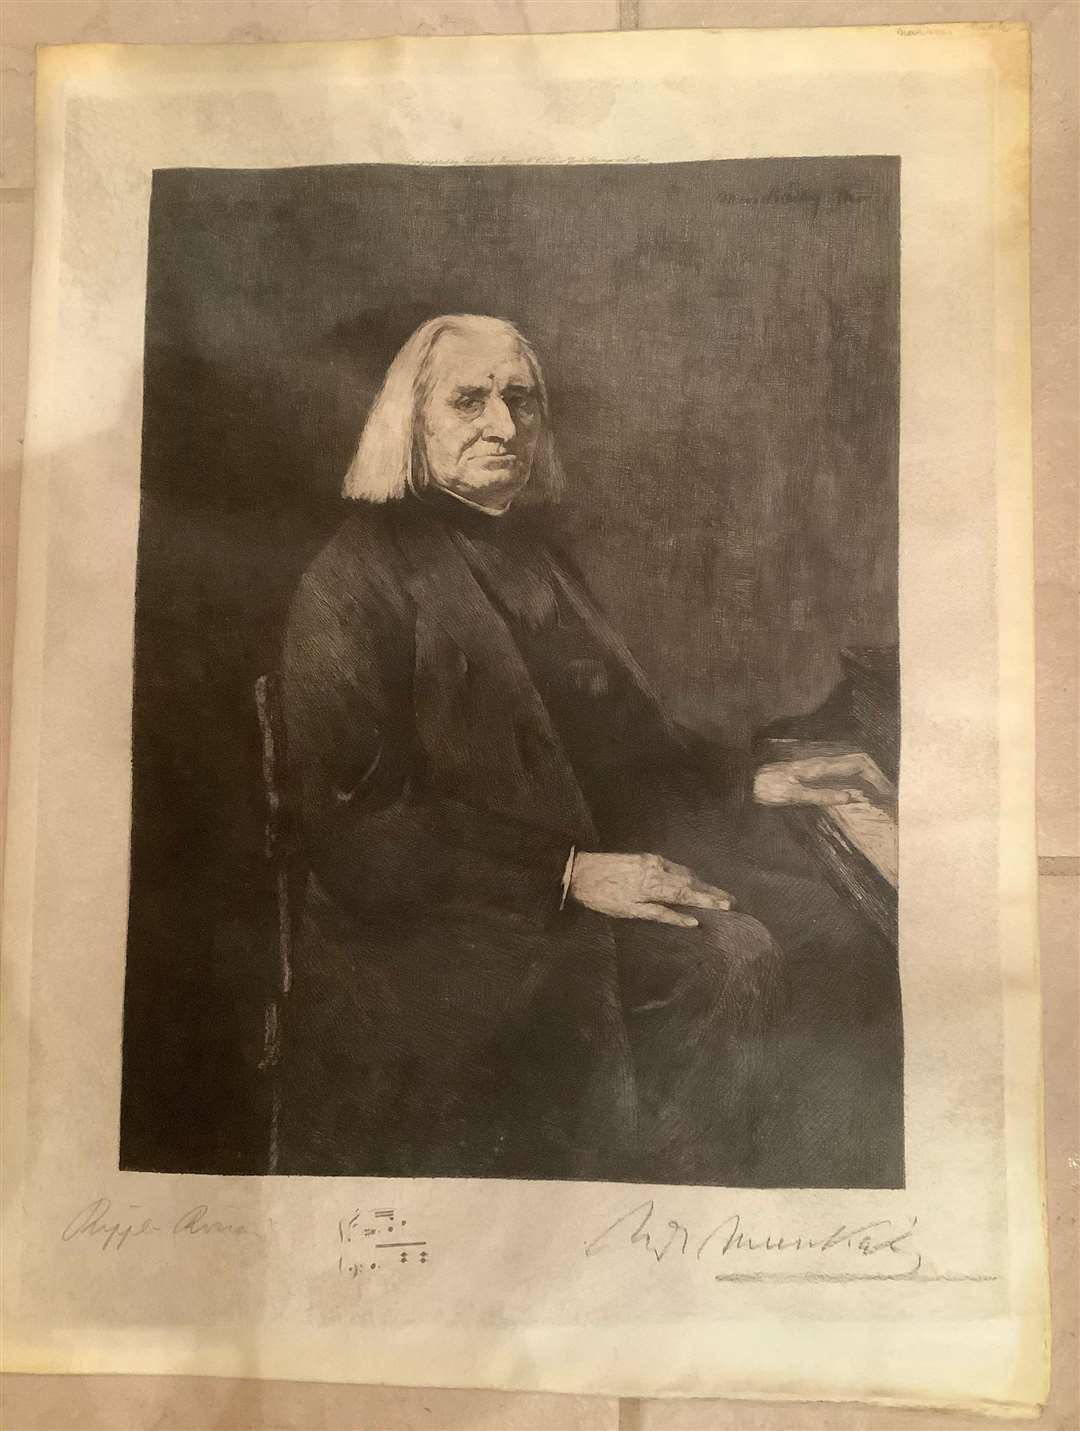 The picture shows world-famous composer Franz Liszt